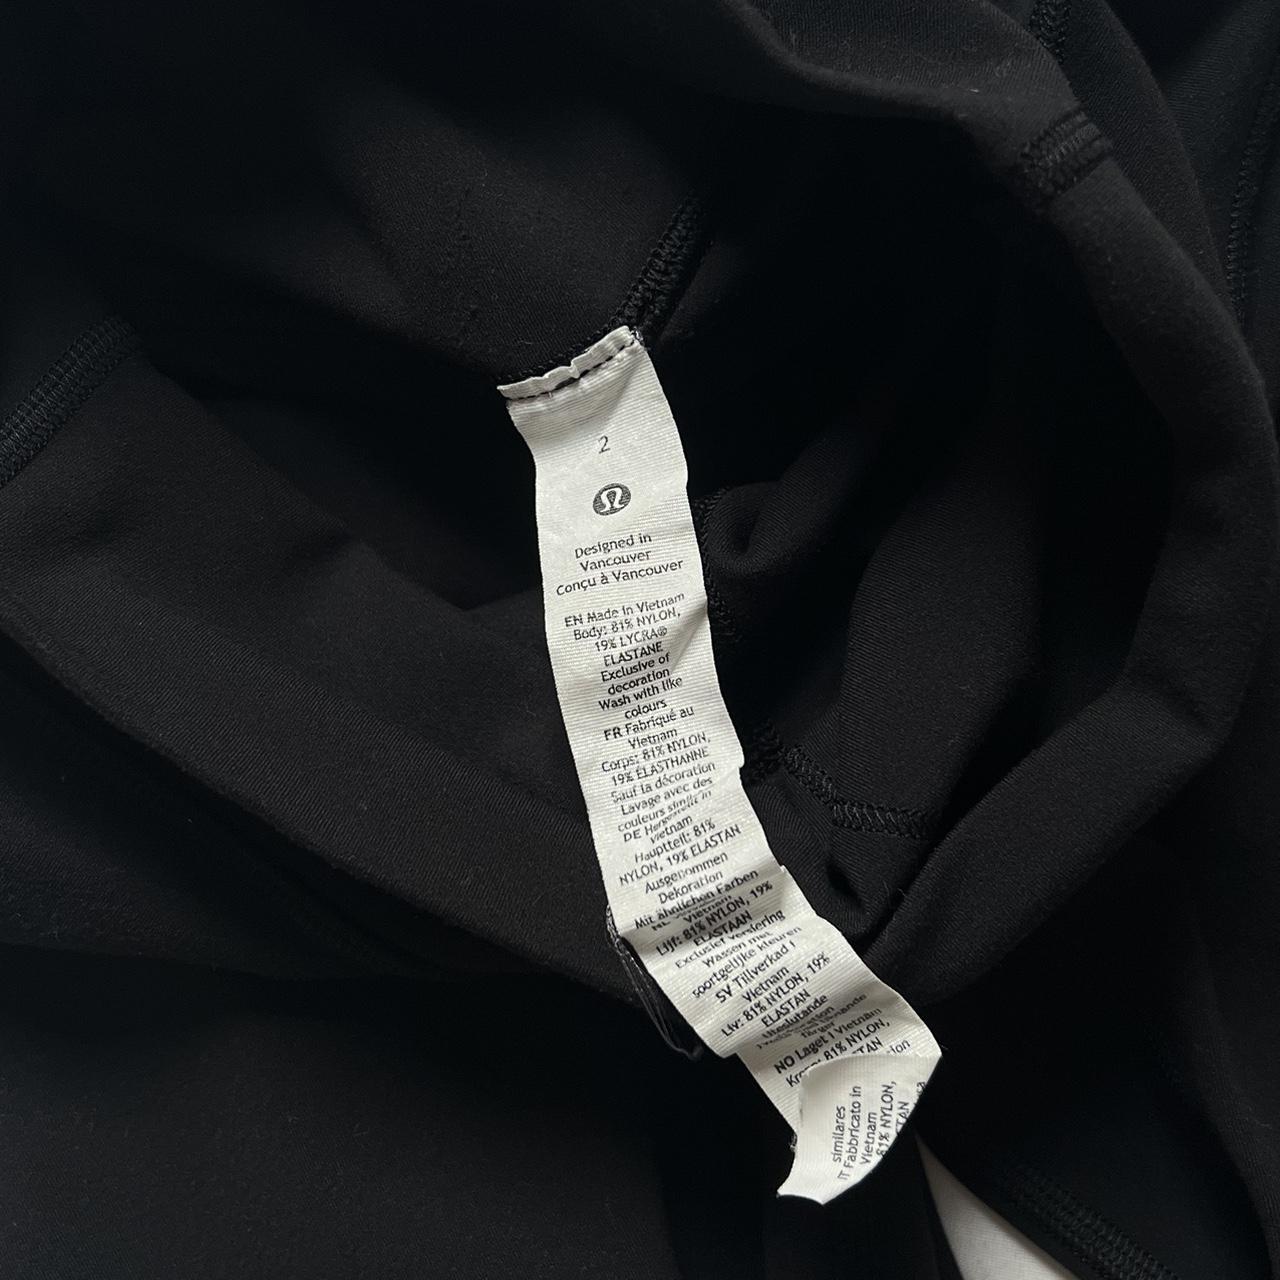 Lulu lemon Align leggings in black size 2 (UK... - Depop